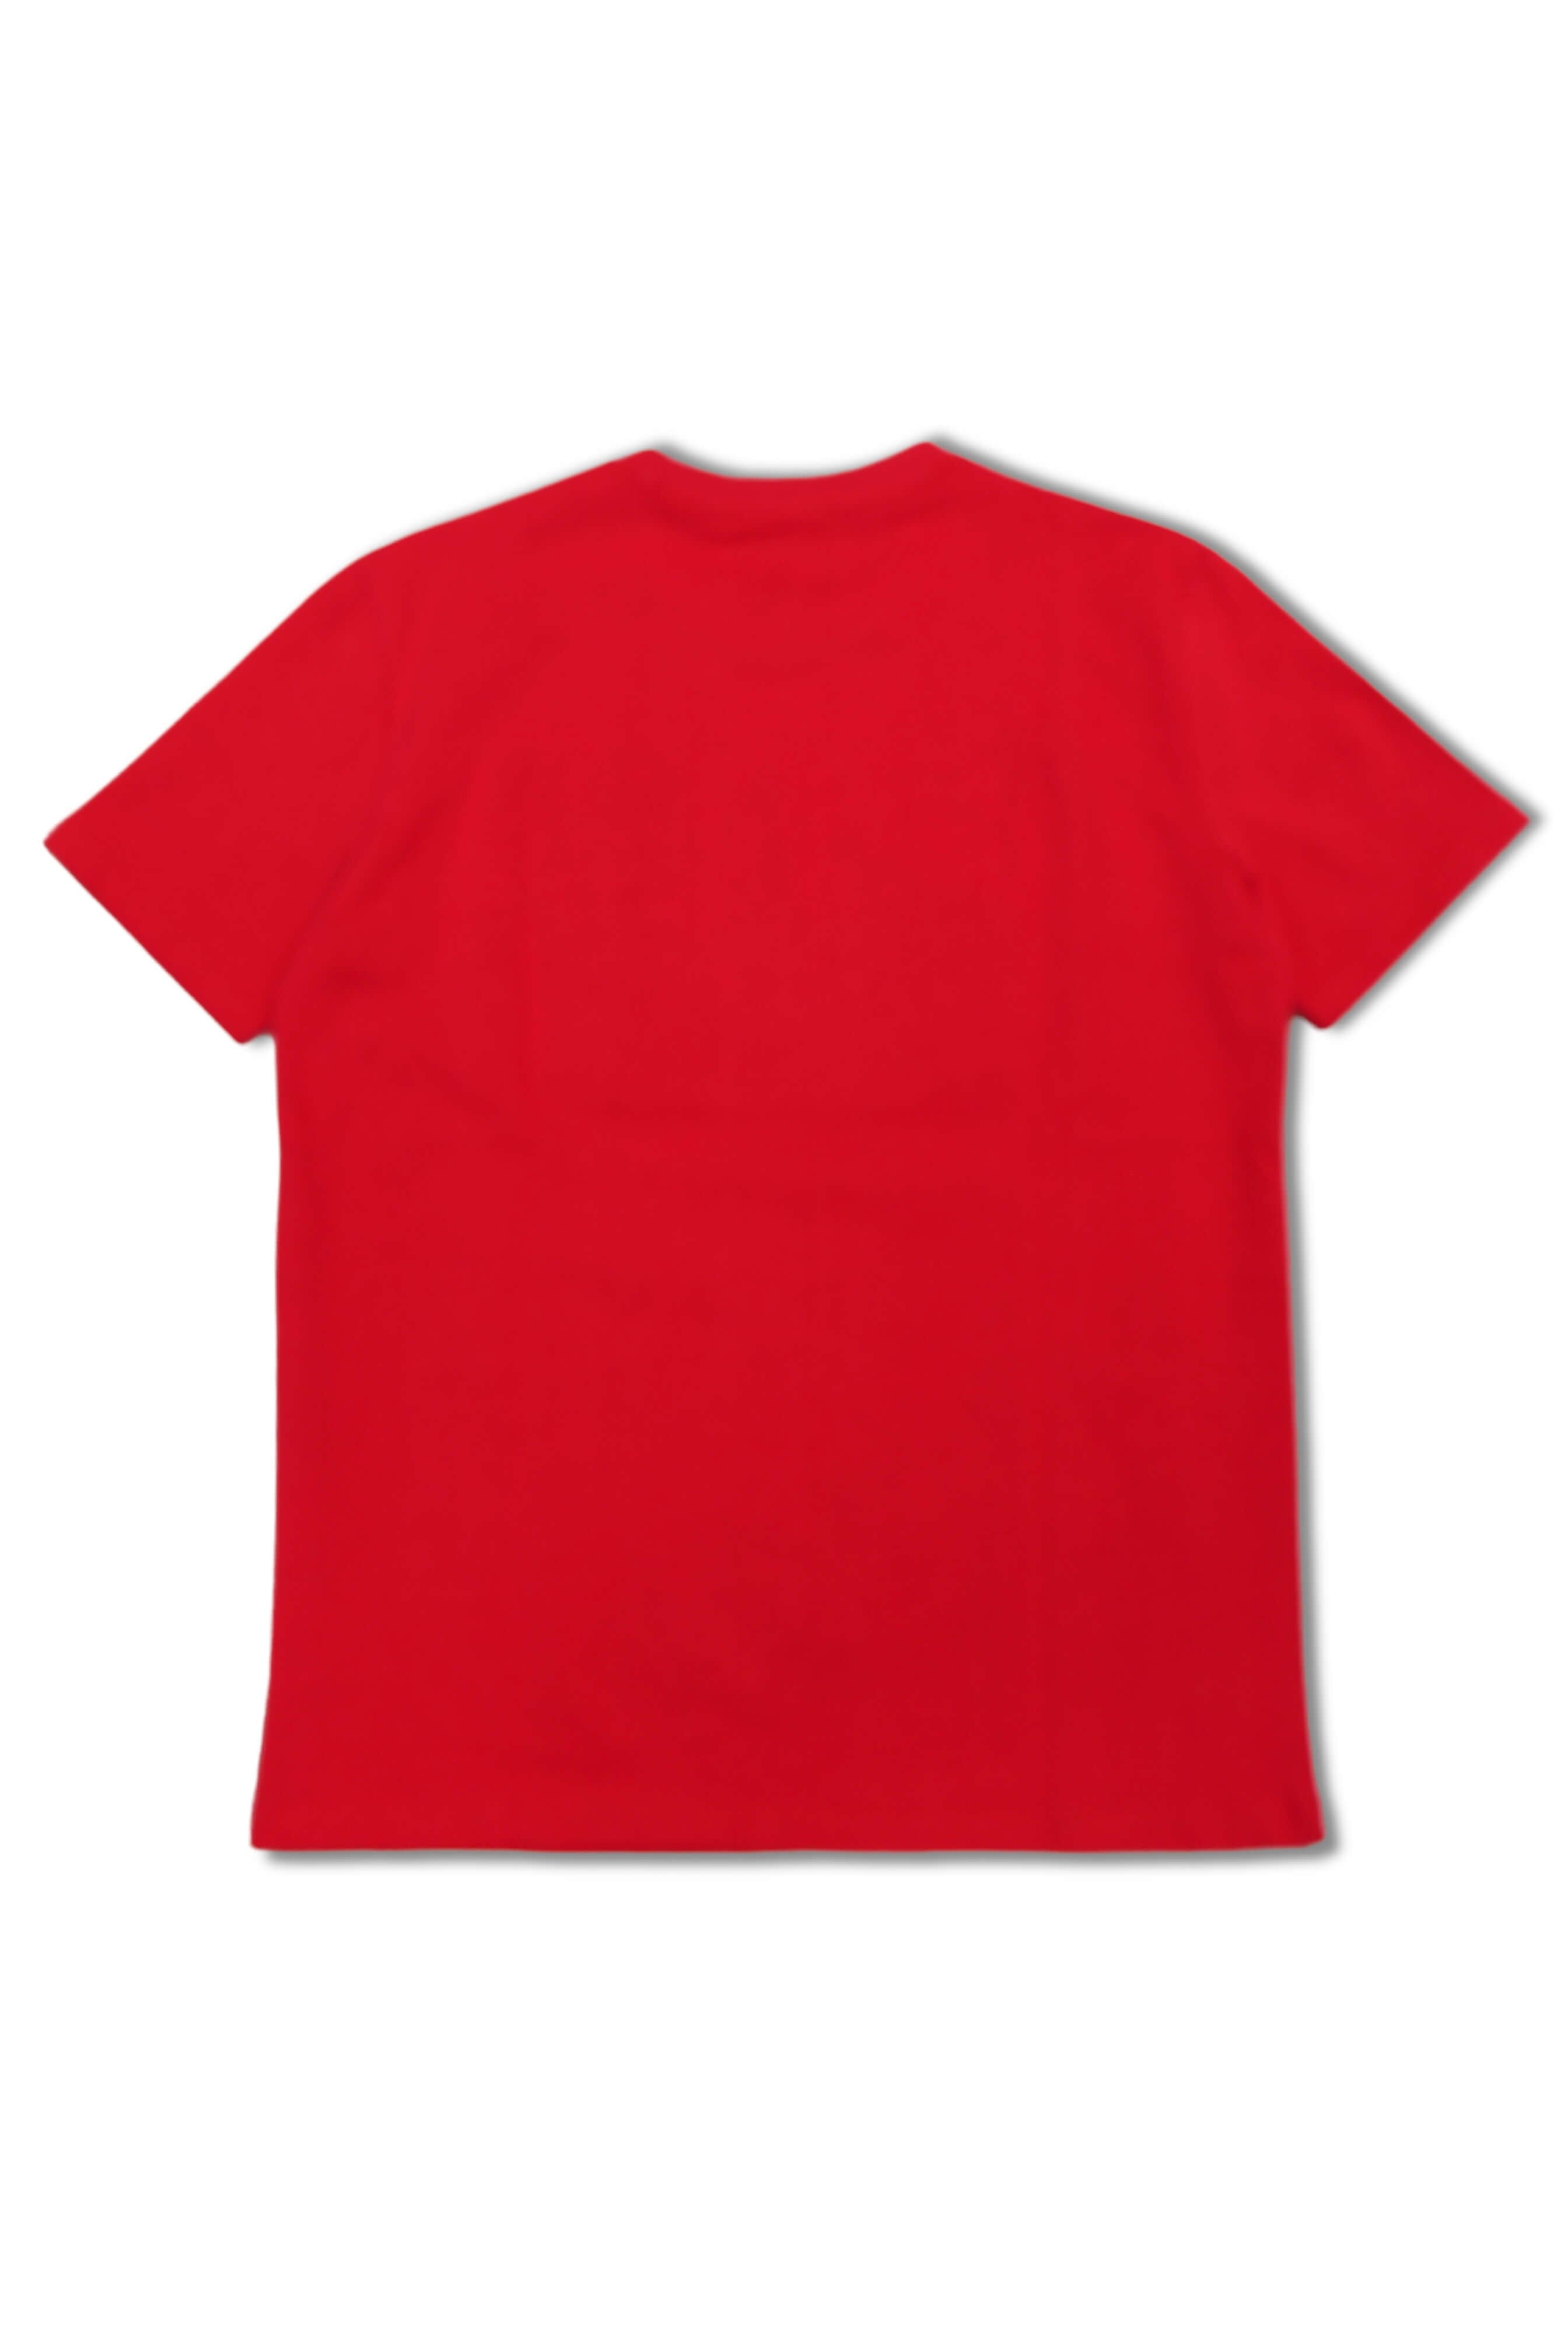 Black Planet- May X Tank T-shirt- Red